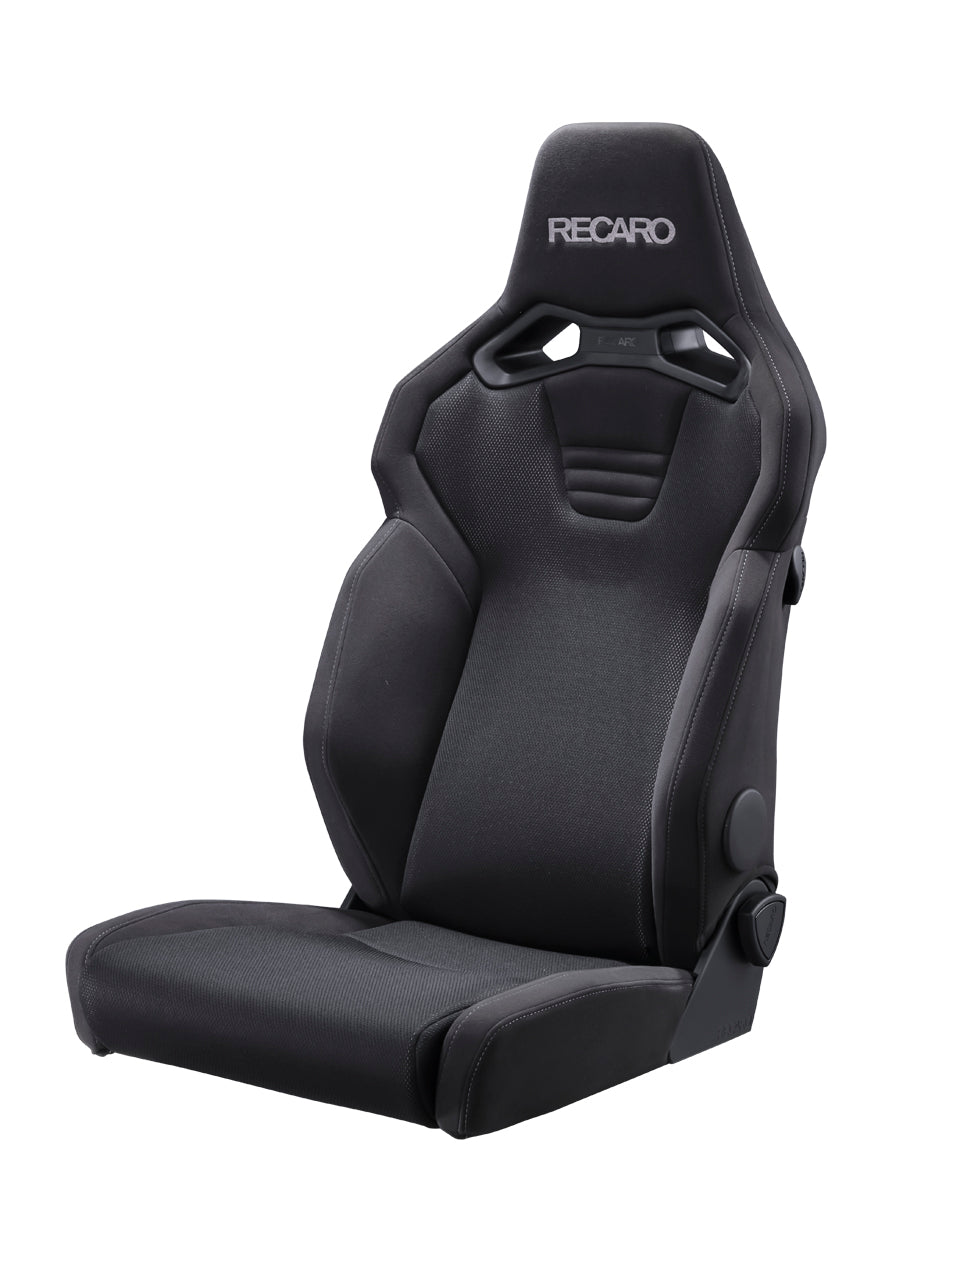 RECARO SR-C BK100 BK BK BRILLIANT MESH BLACK AND KAMUI BLACK COLOR SEAT FOR  81-121.20.640-0